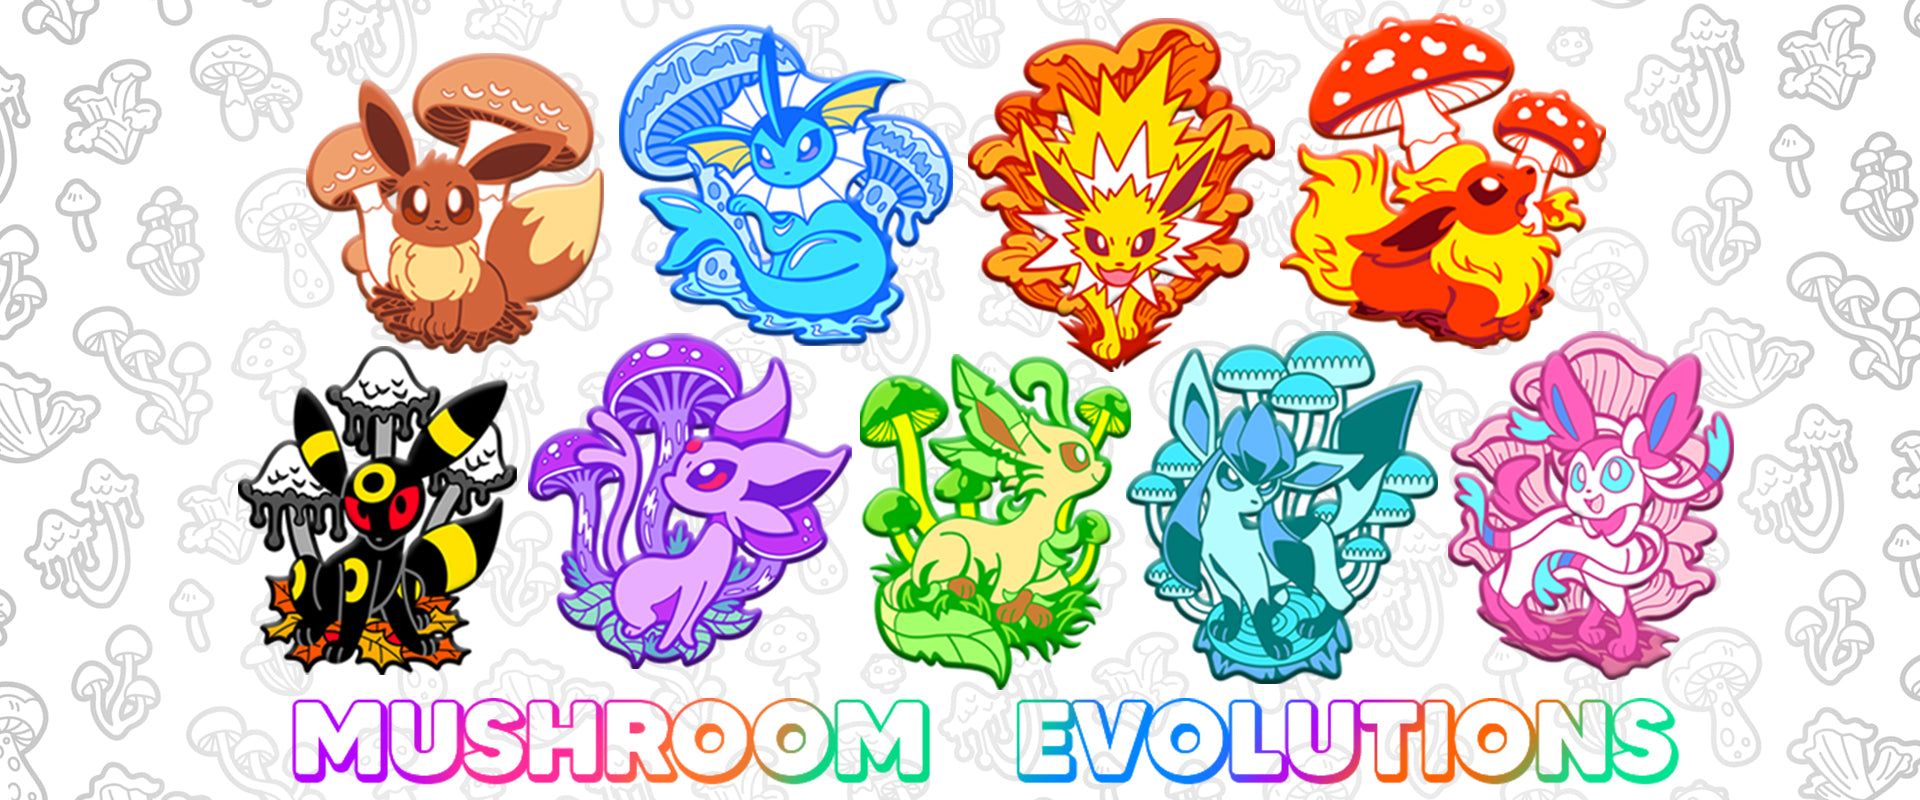 Mushroom Evolutions